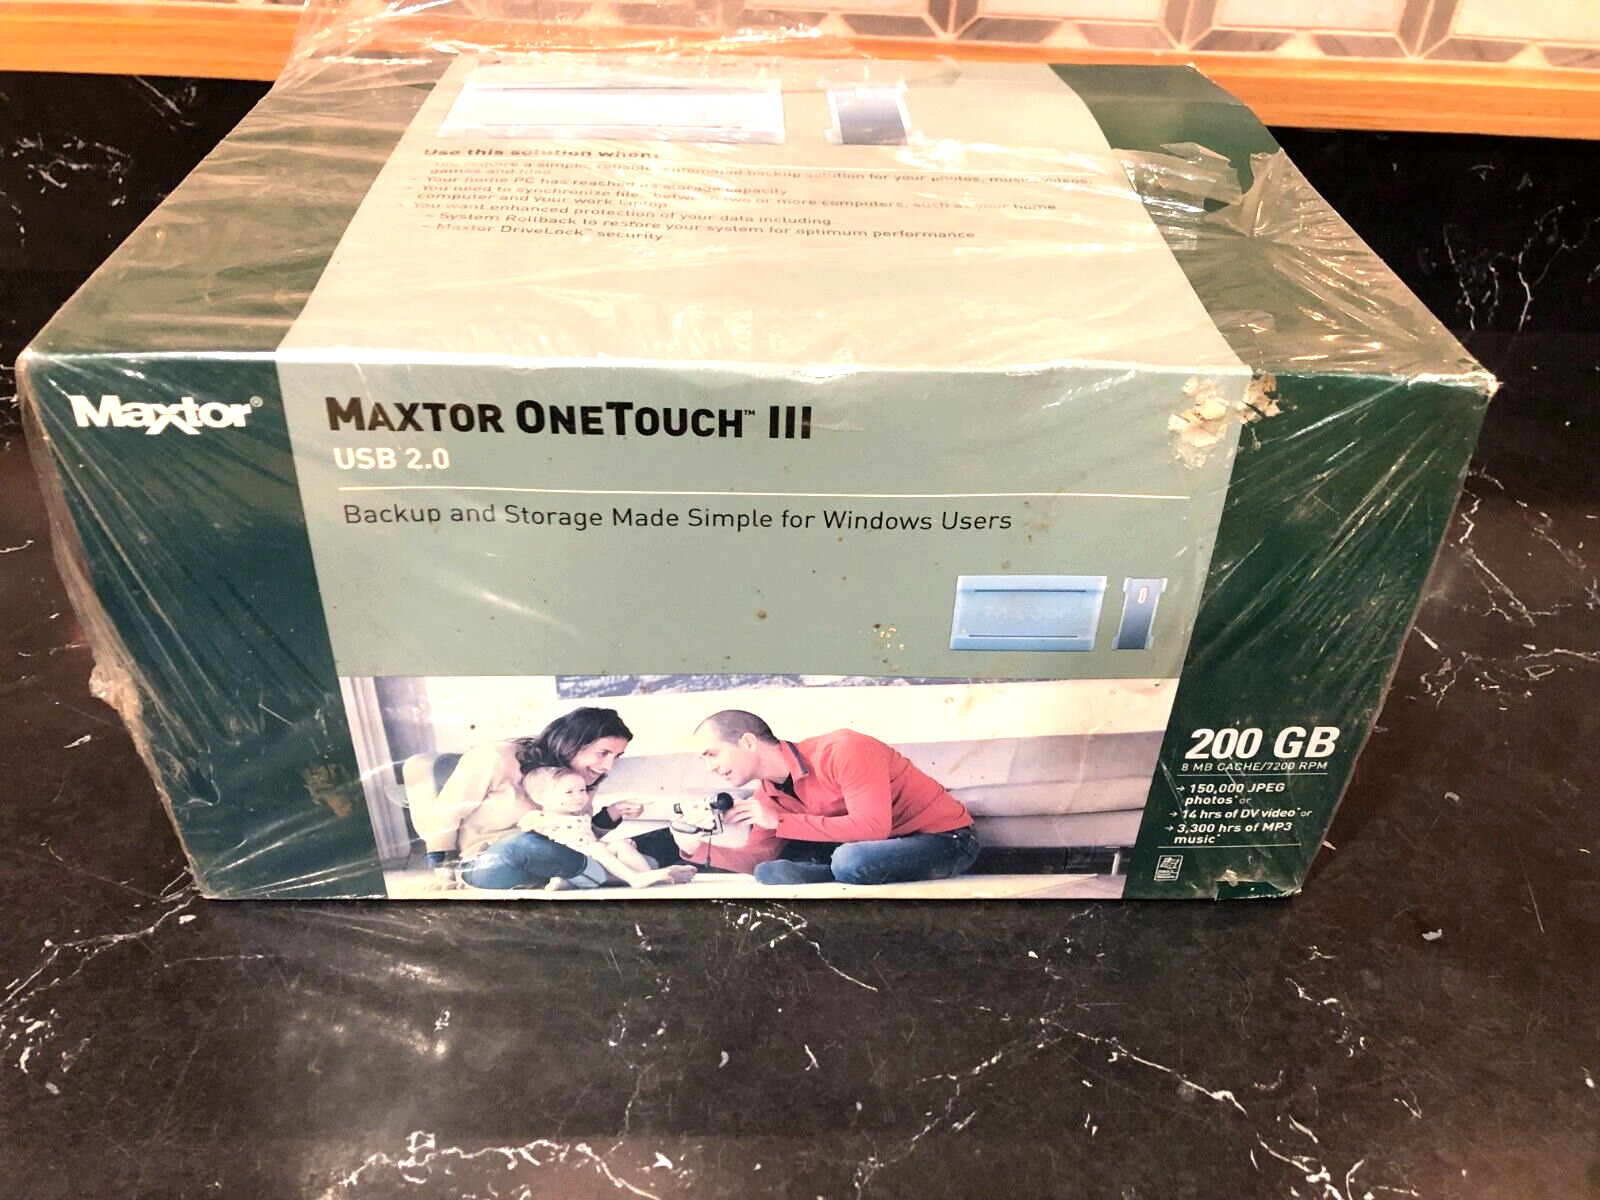 Maxtor One Touch III 200gb usb 2.0